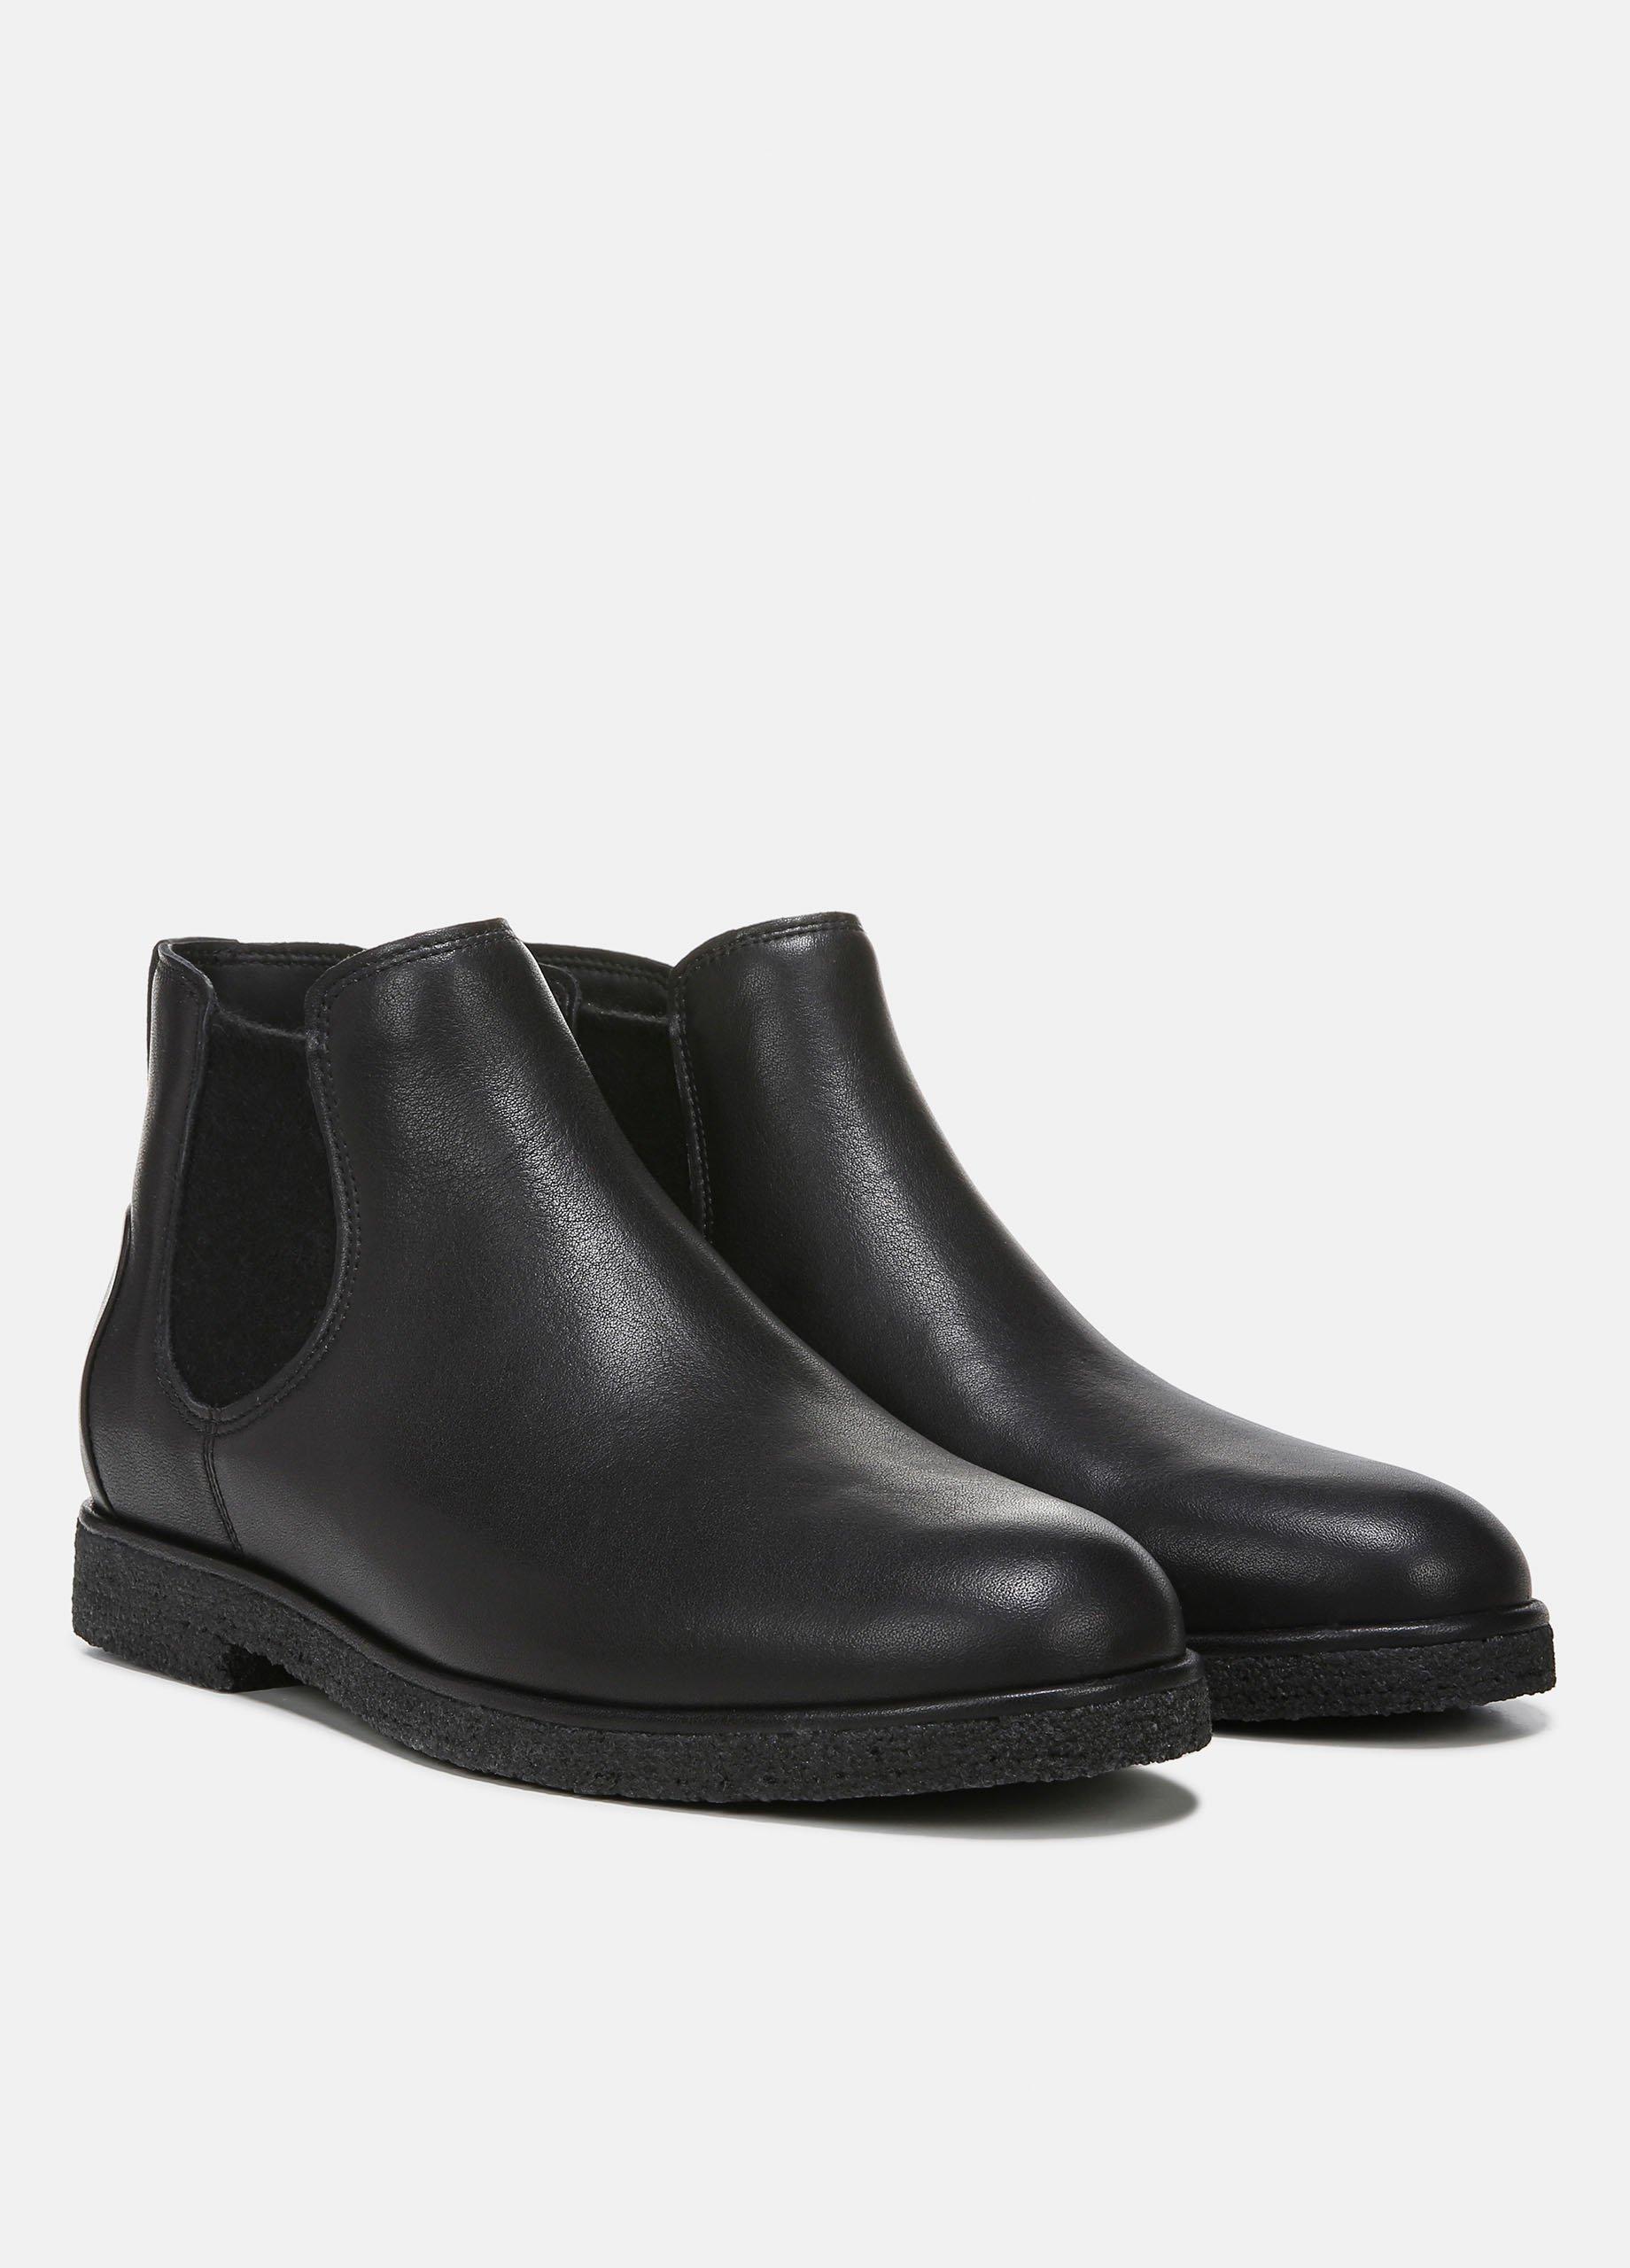 Bonham Leather Boot